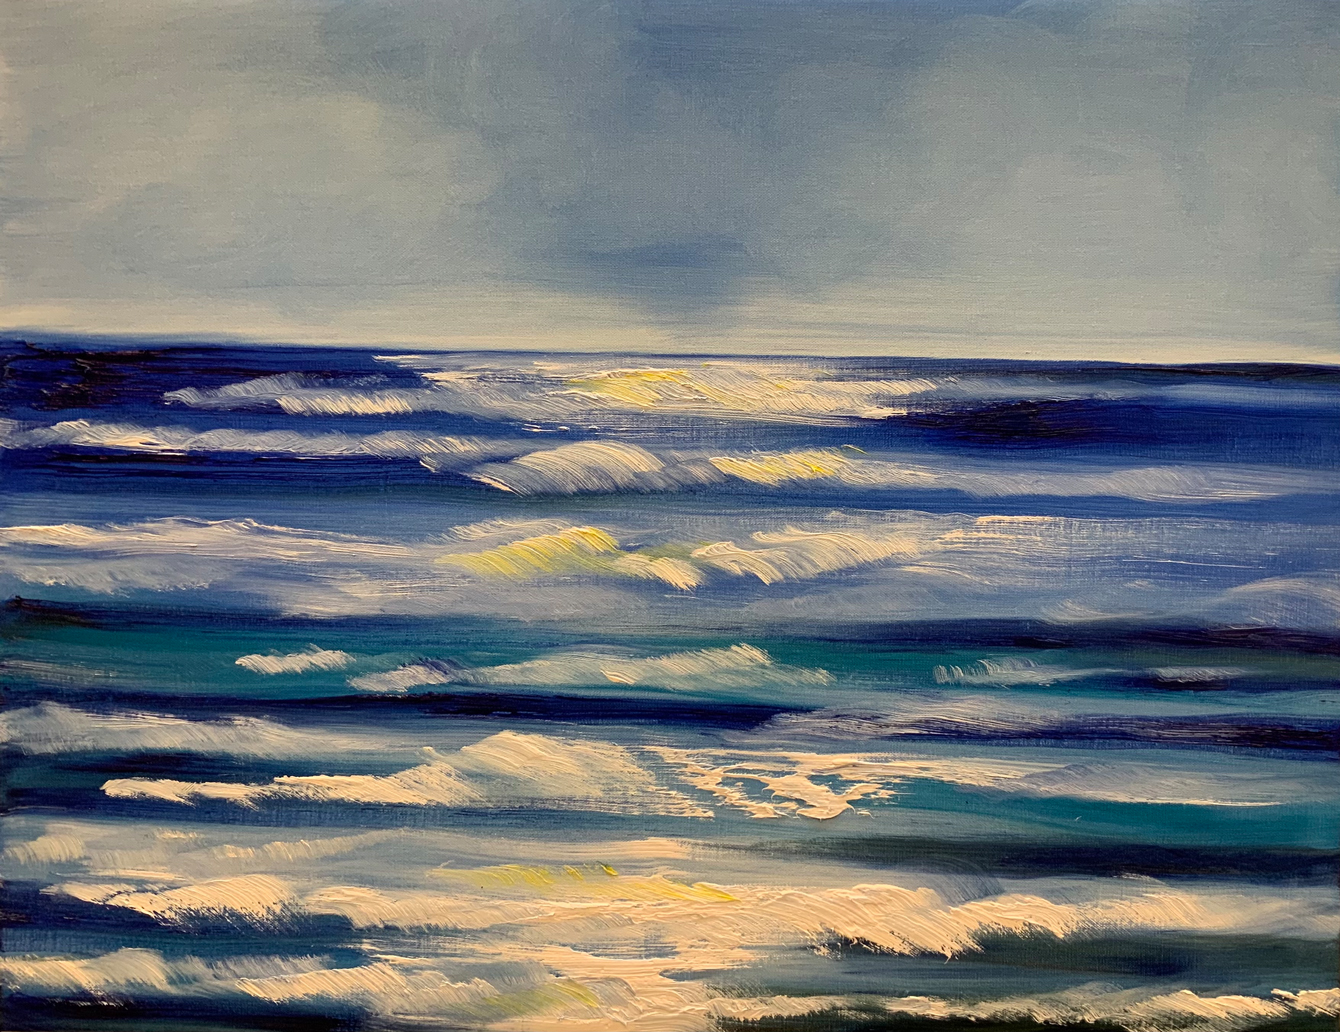 Bettina Mauel: Alone with Waves